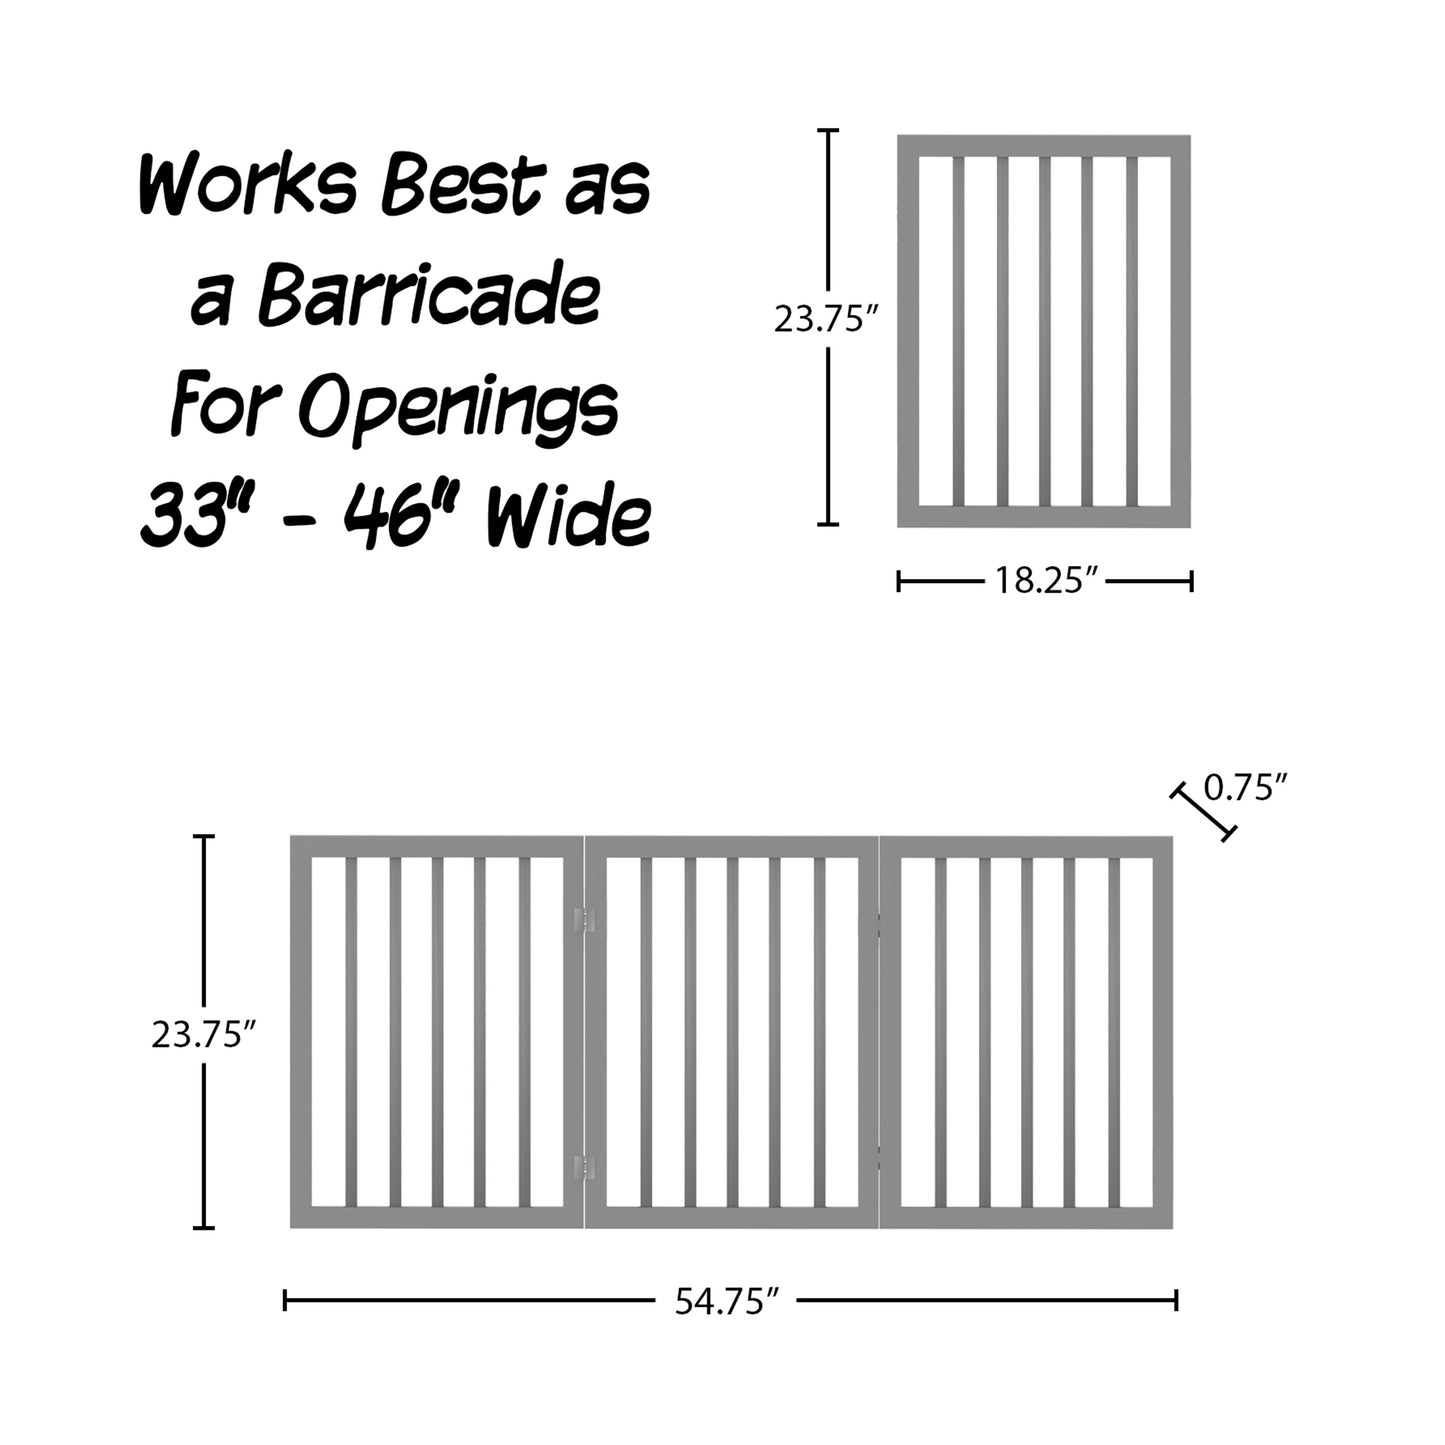 PETMAKER 3-Panel Indoor Foldable Pet Gate, Gray